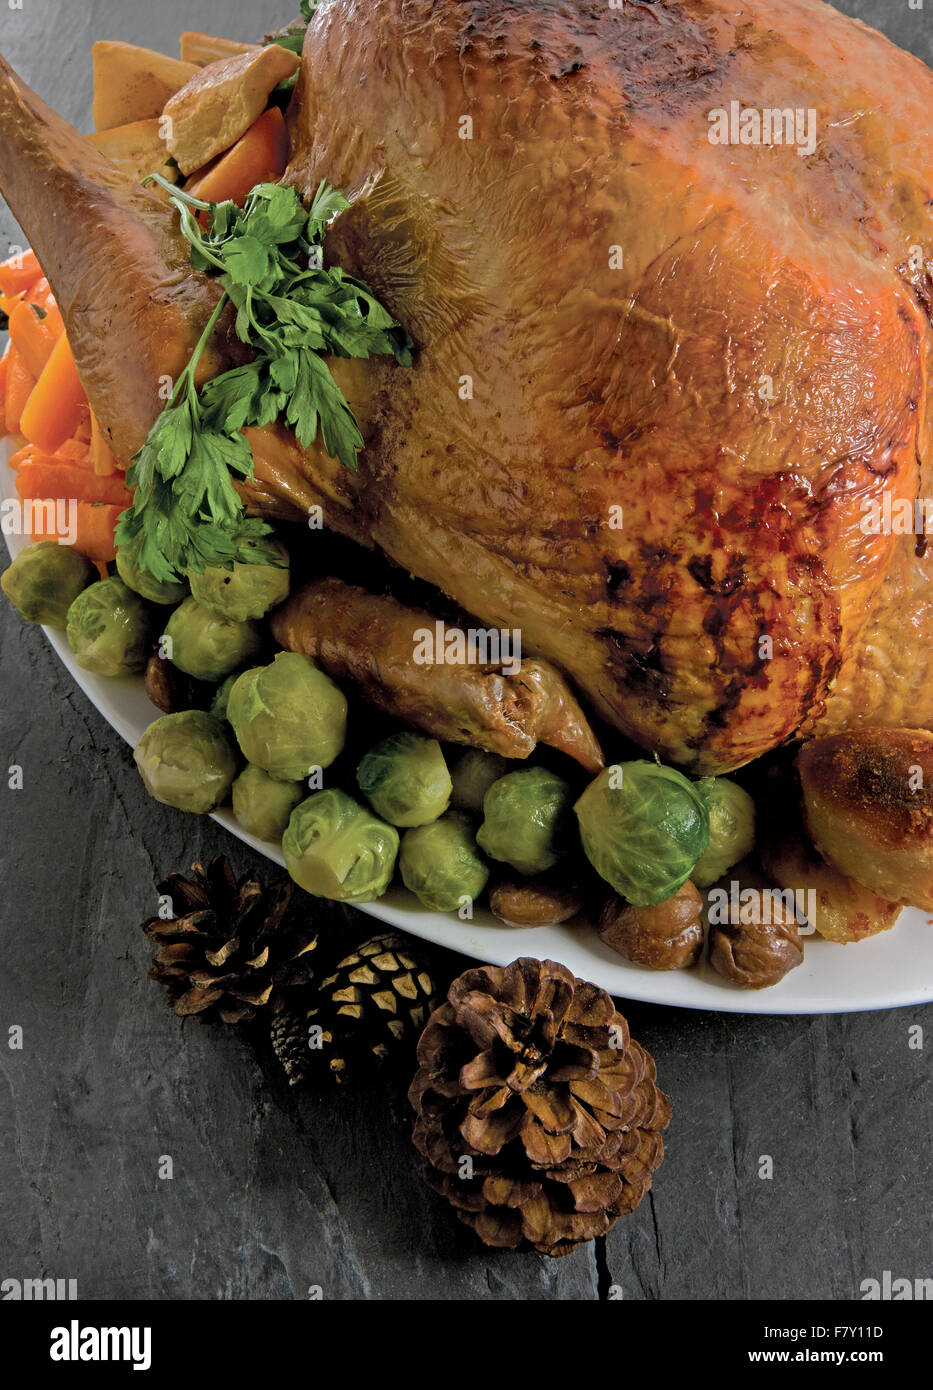 Christmas food – roast turkey with festive vegetables Stock Photo